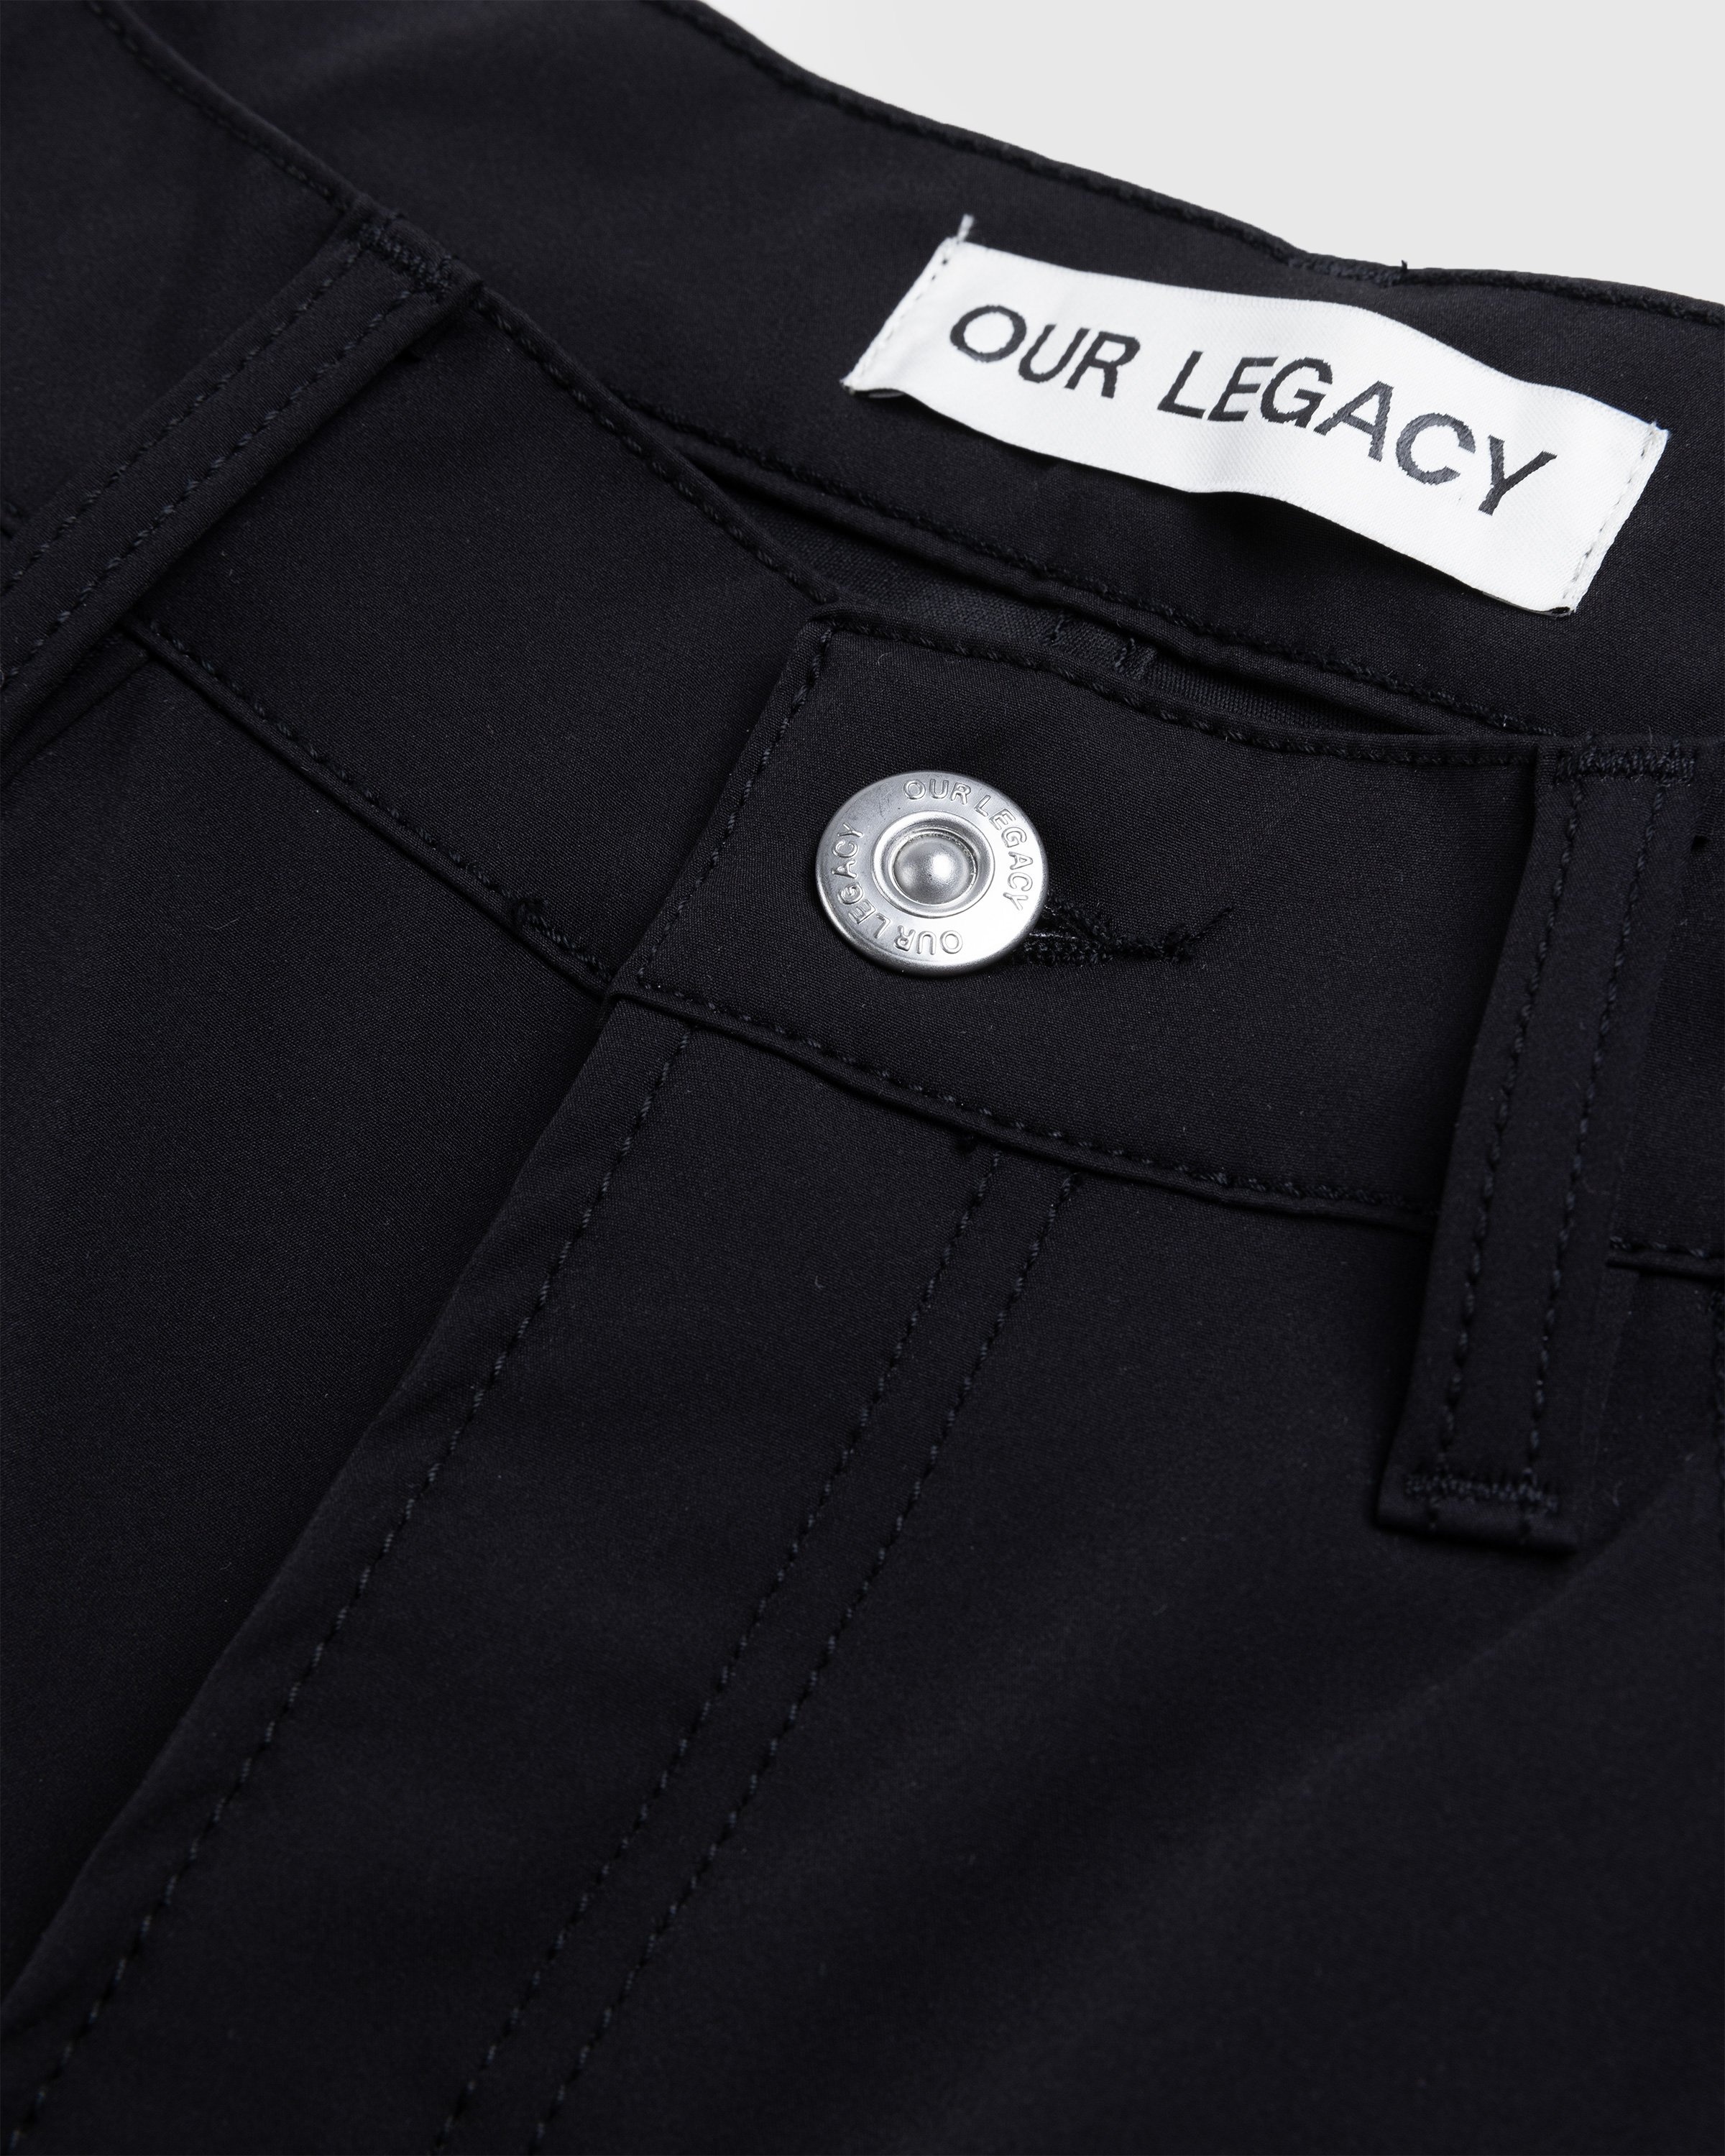 Our Legacy – Formal Cut Black Muted Scuba - Pants - Black - Image 4